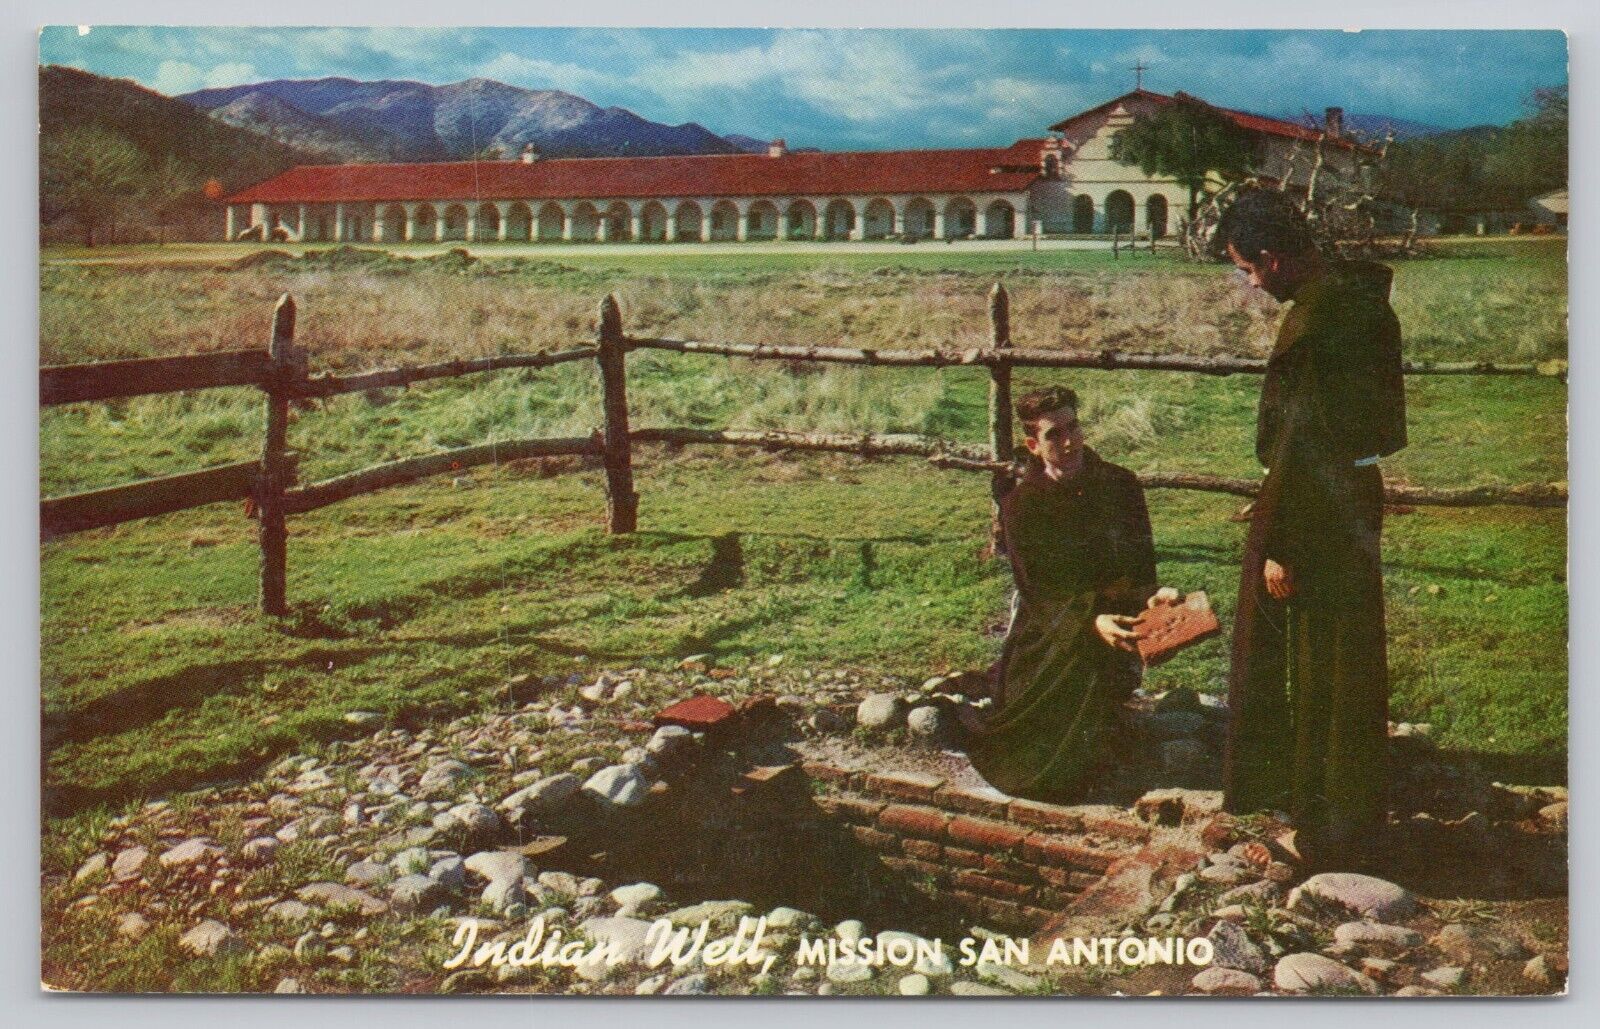 Jolon California, Mission San Antonio Indian Well Friars, Vintage Postcard